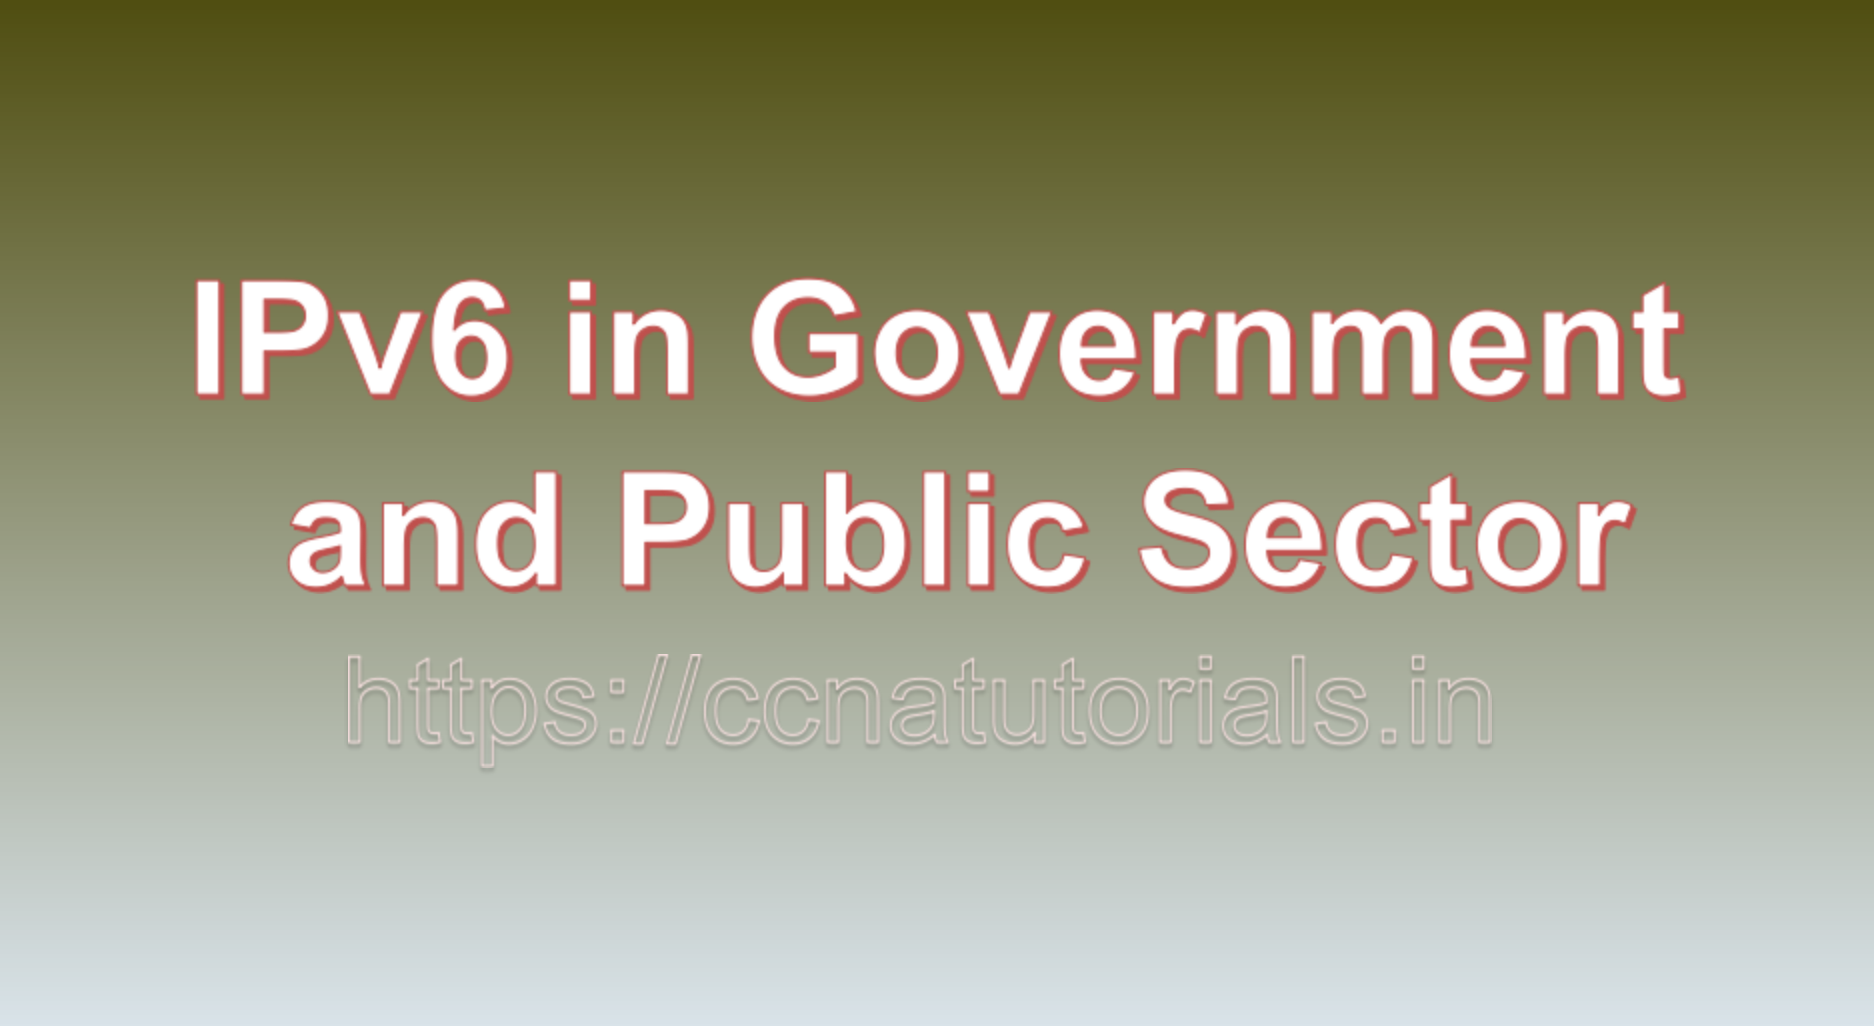 IPv6 in Government and Public Sector, ccna, ccna tutorials